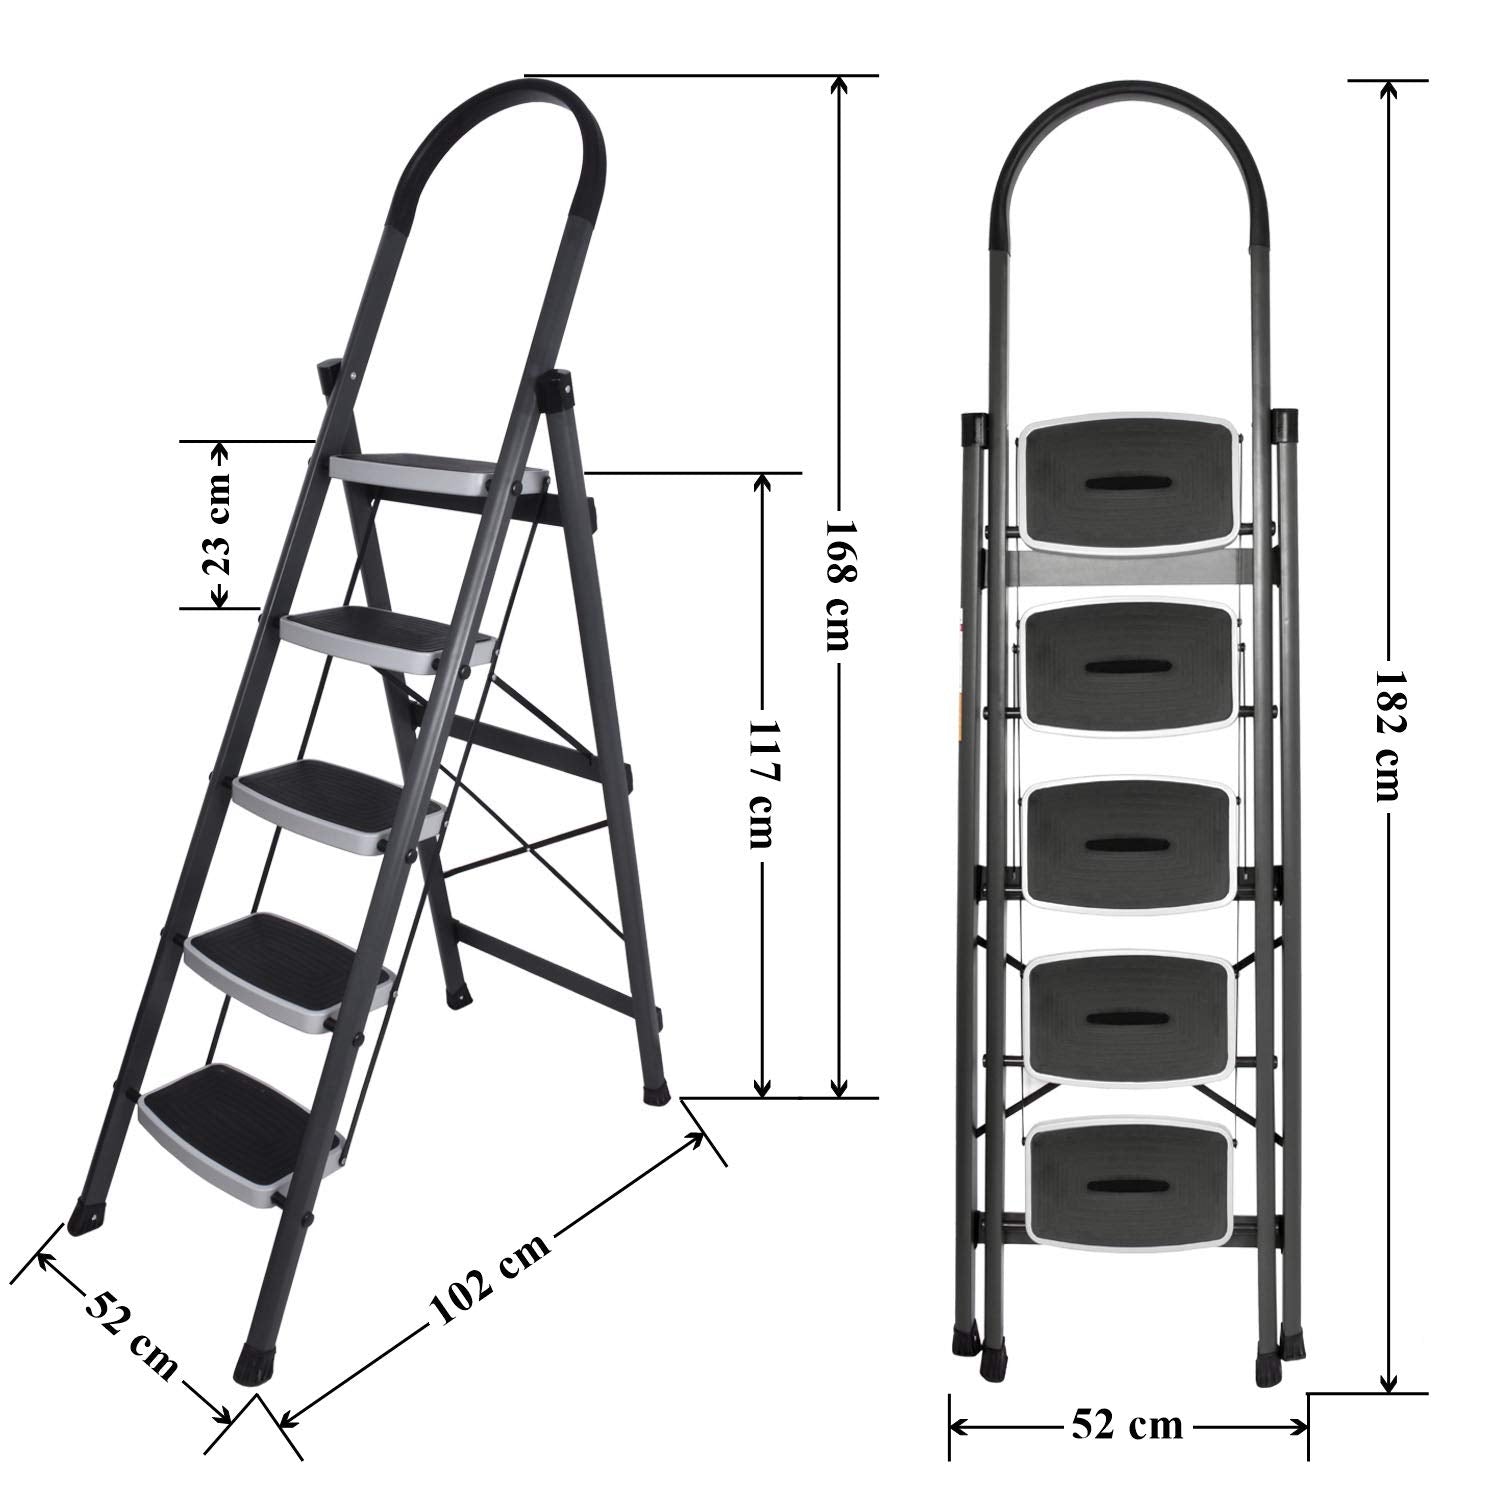 Plantex Ladder for Home-Foldable Steel 5 Step Ladder-Wide Anti Skid Steps (Gray & White)